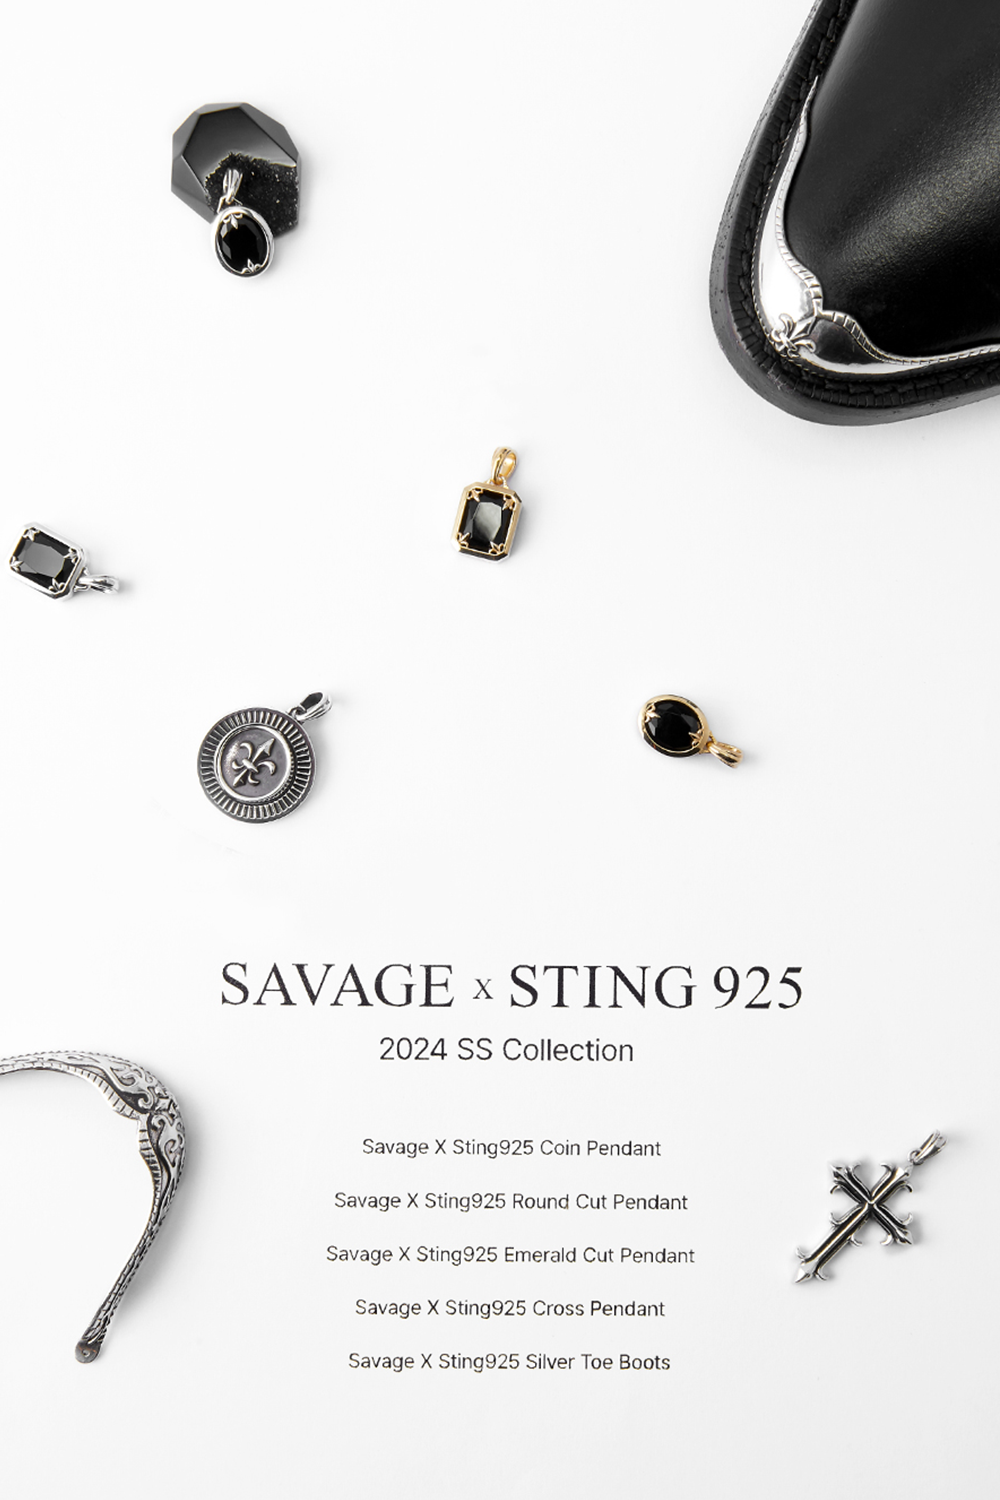 Savage X Sting925